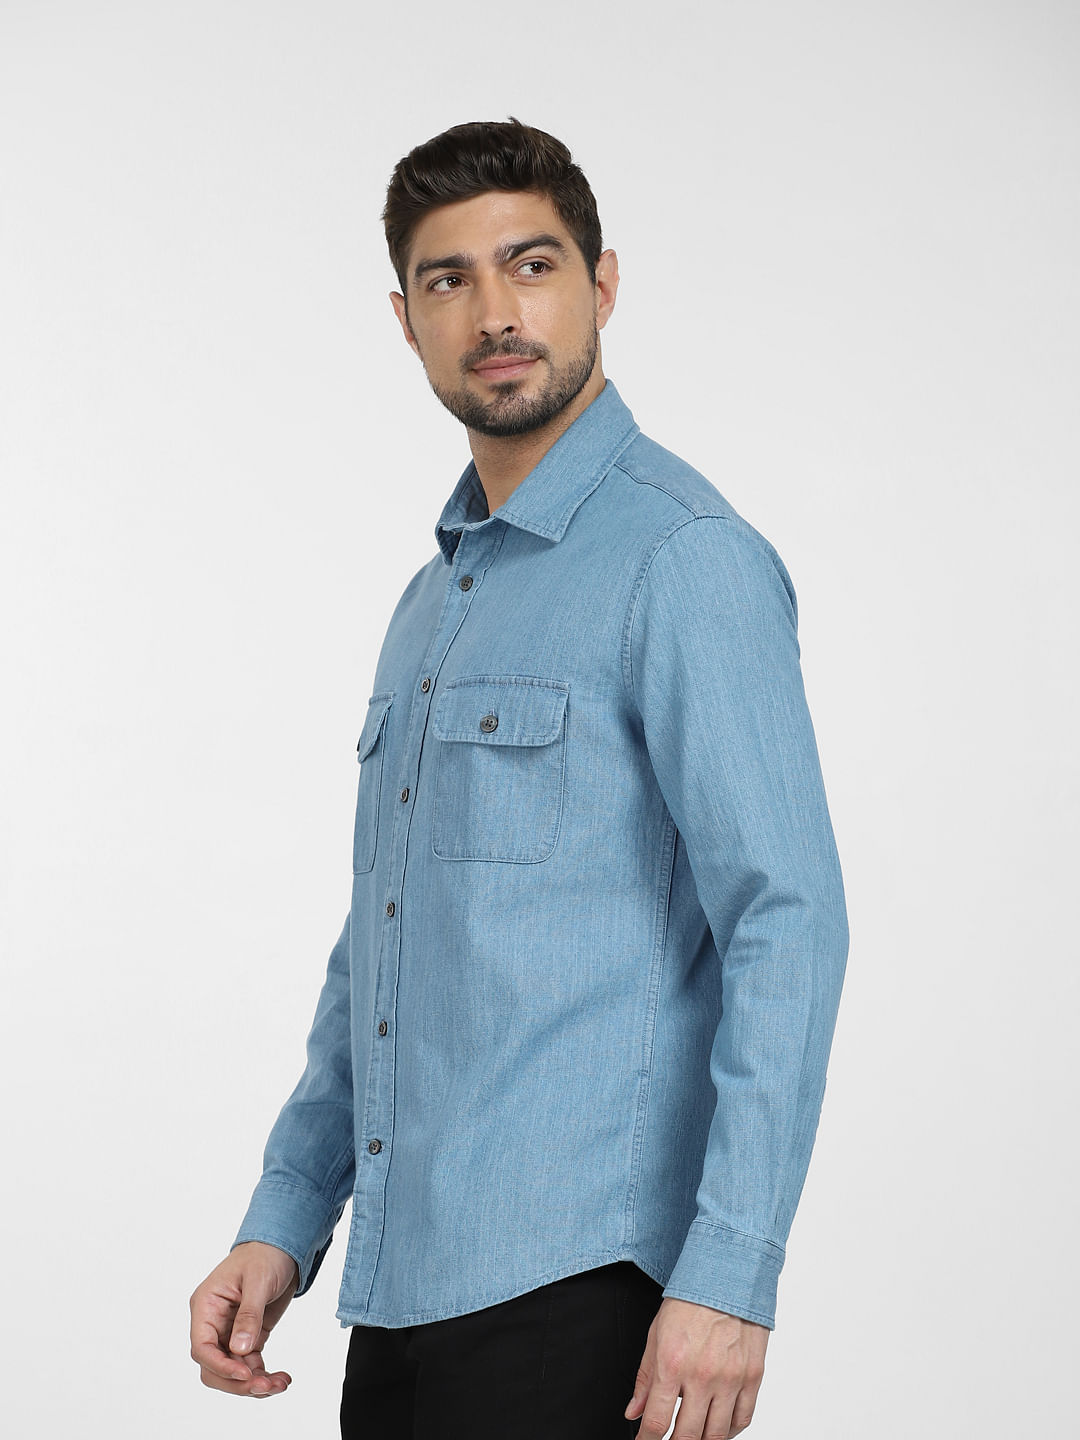 Buy light blue double pocket men's denim shirt-North Republic